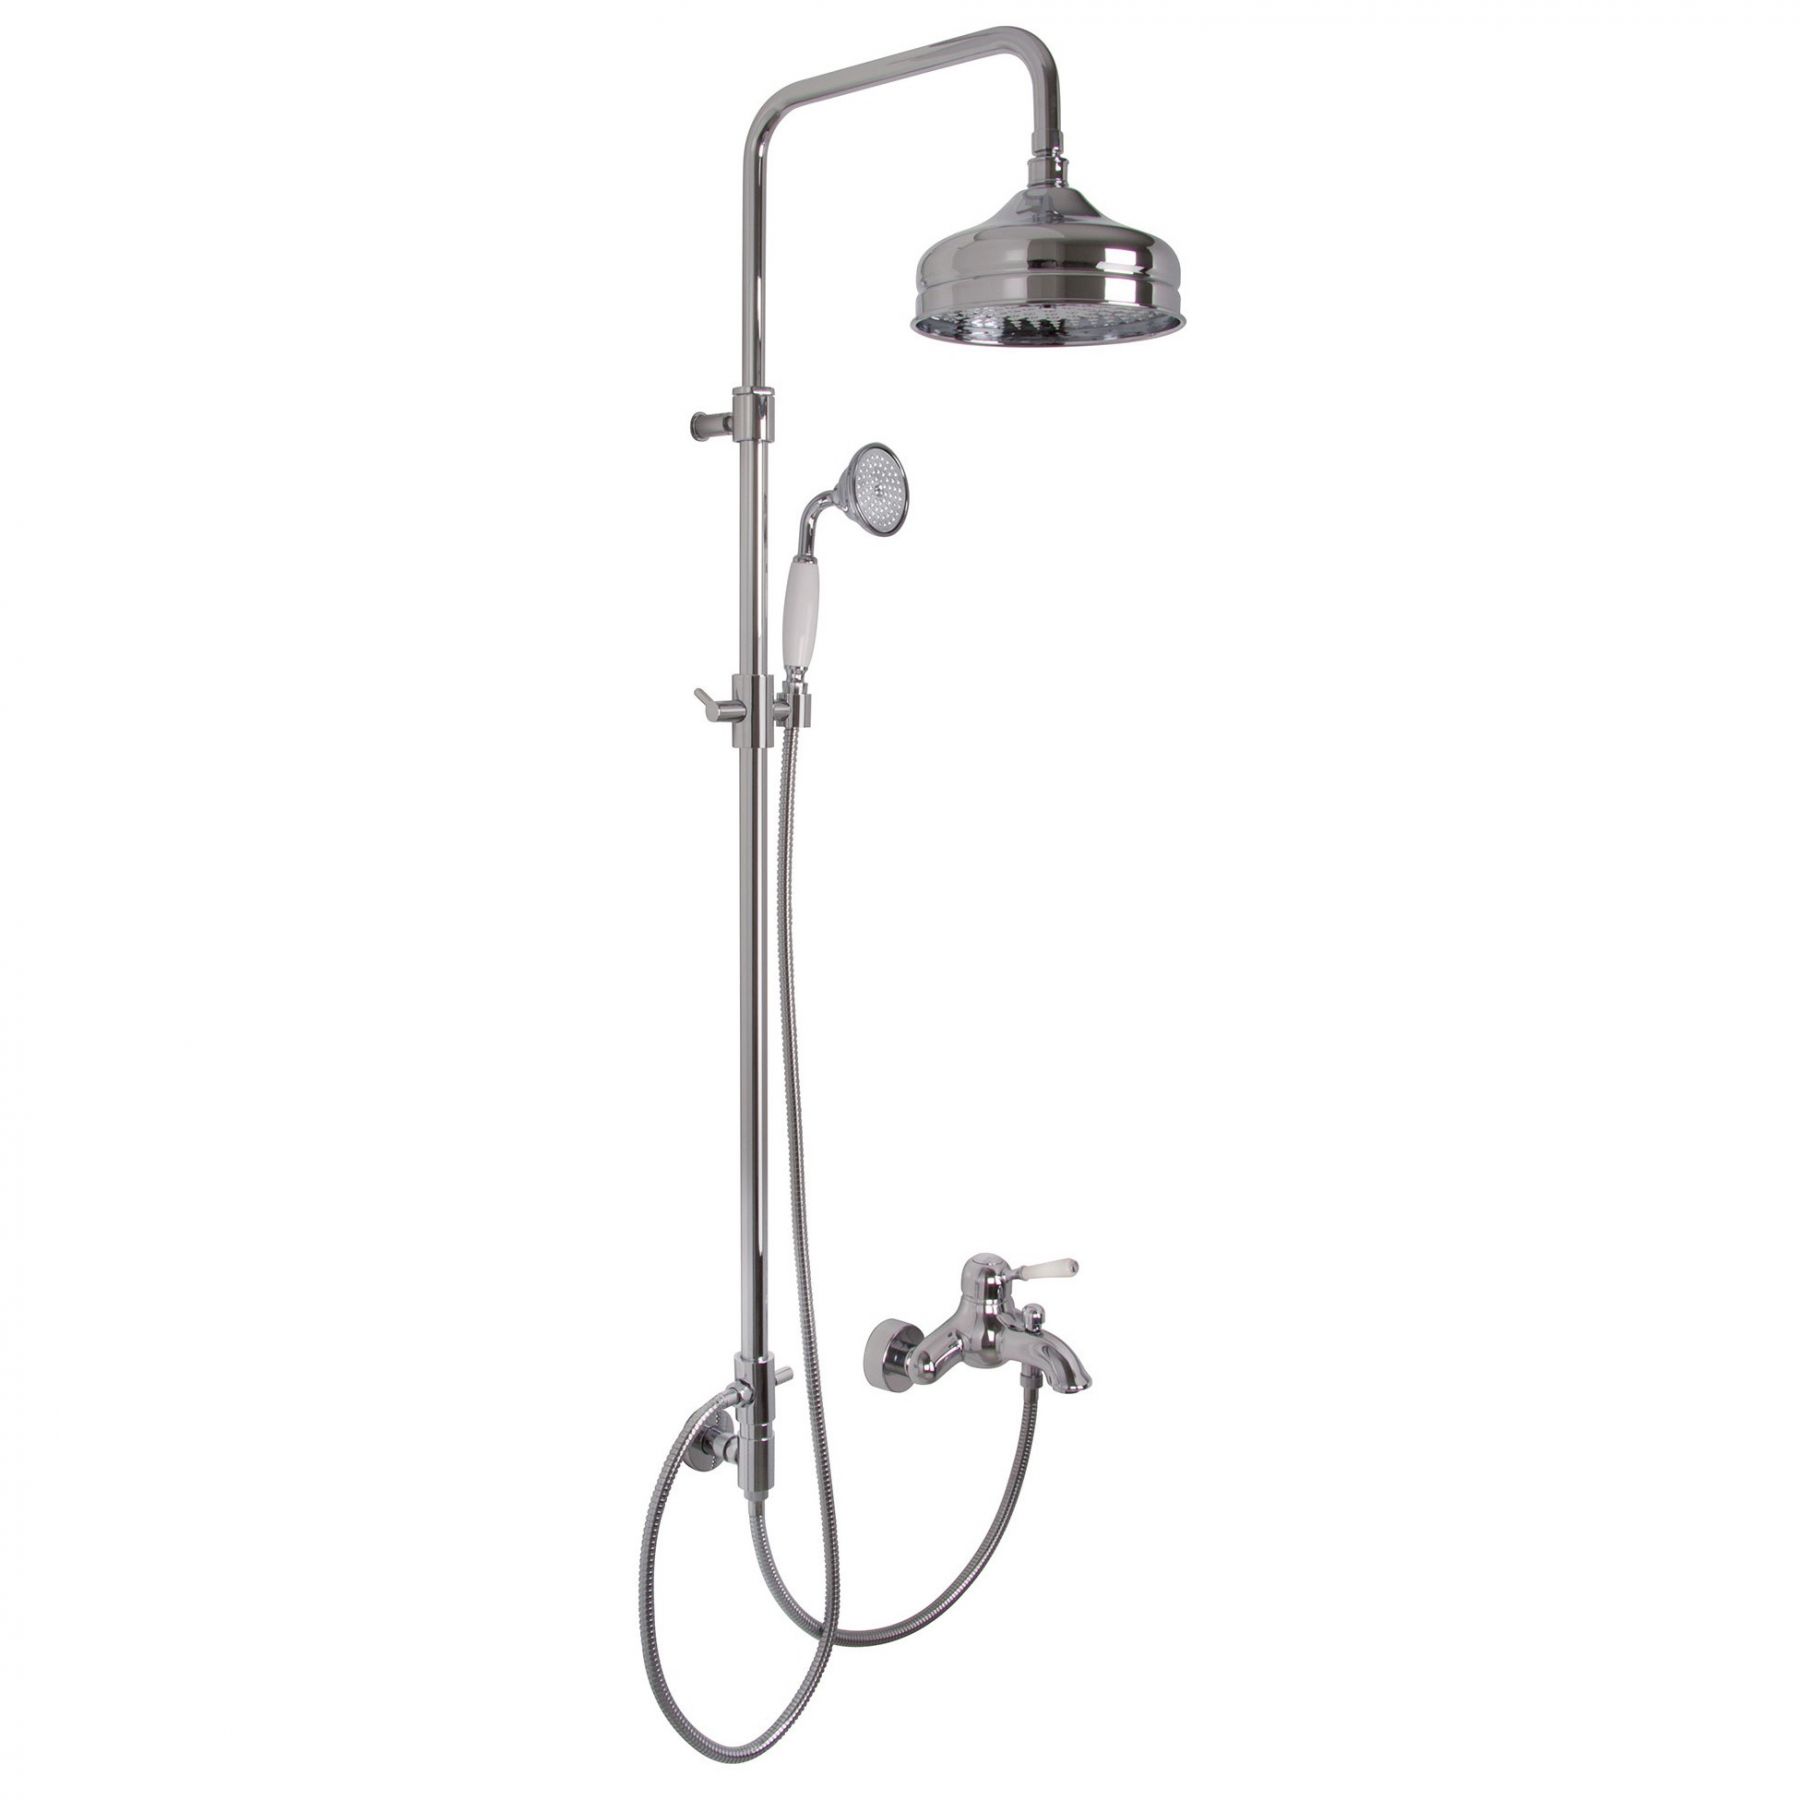 Fima - carlo frattini Lamp/Bell стойка душевая с тропическим душем F3364/2 схема 2